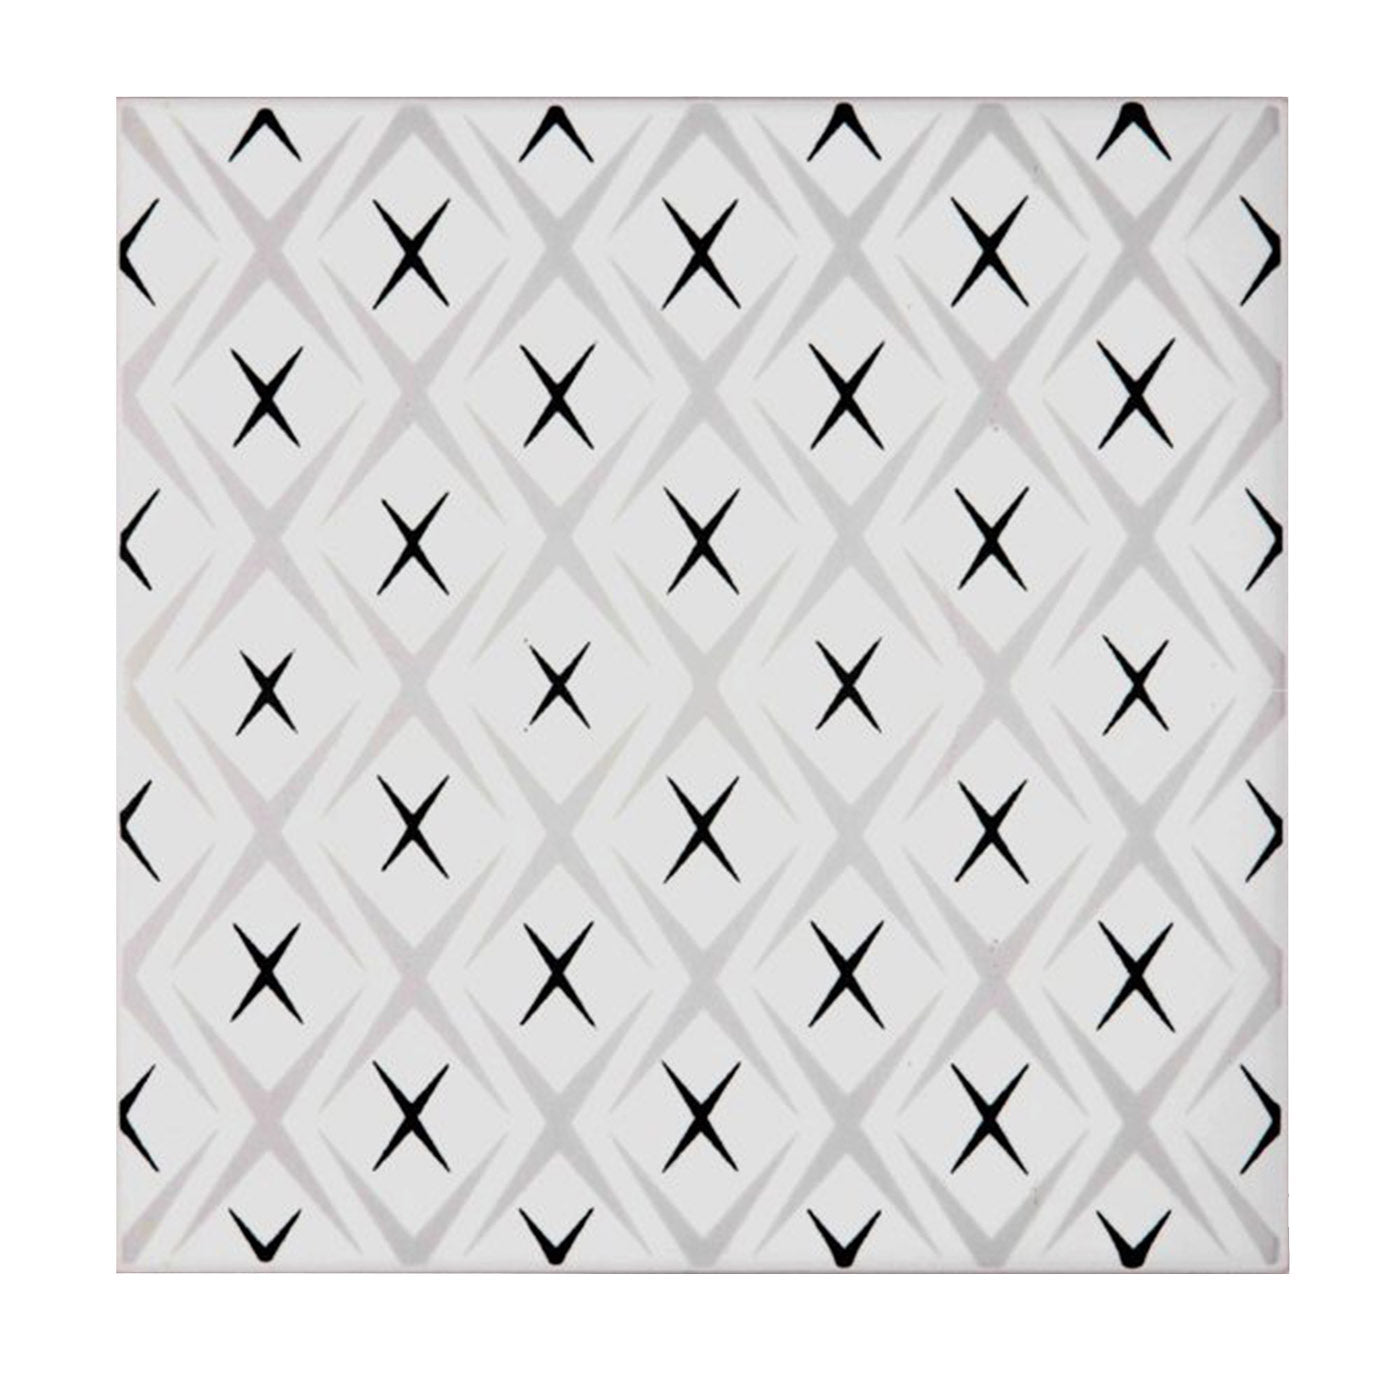 Set of 25 Geometric Trend C44 T4 Tiles - Main view